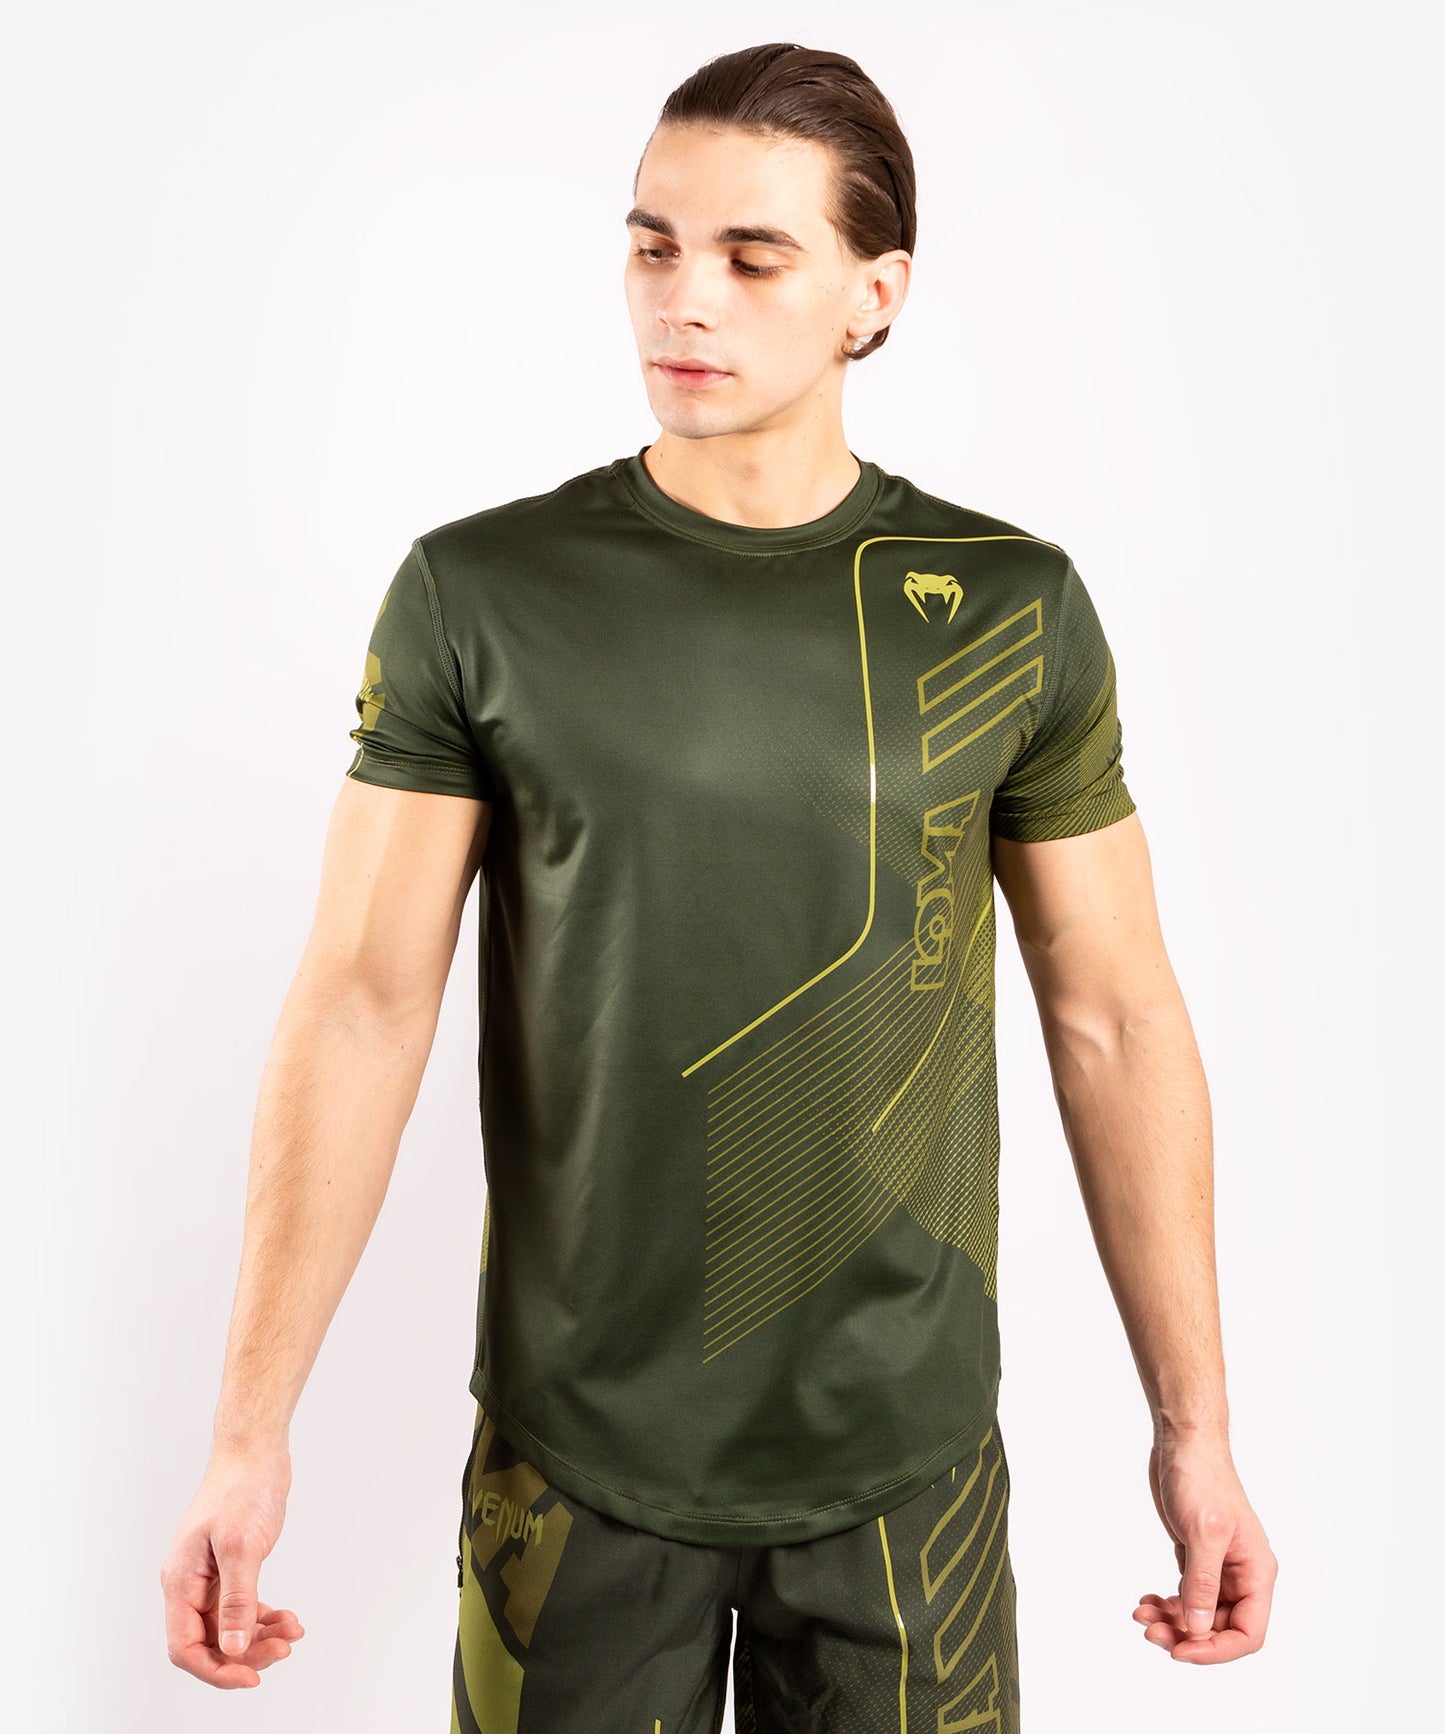 Camiseta Dry Tech Venum Loma Commando - Kaki